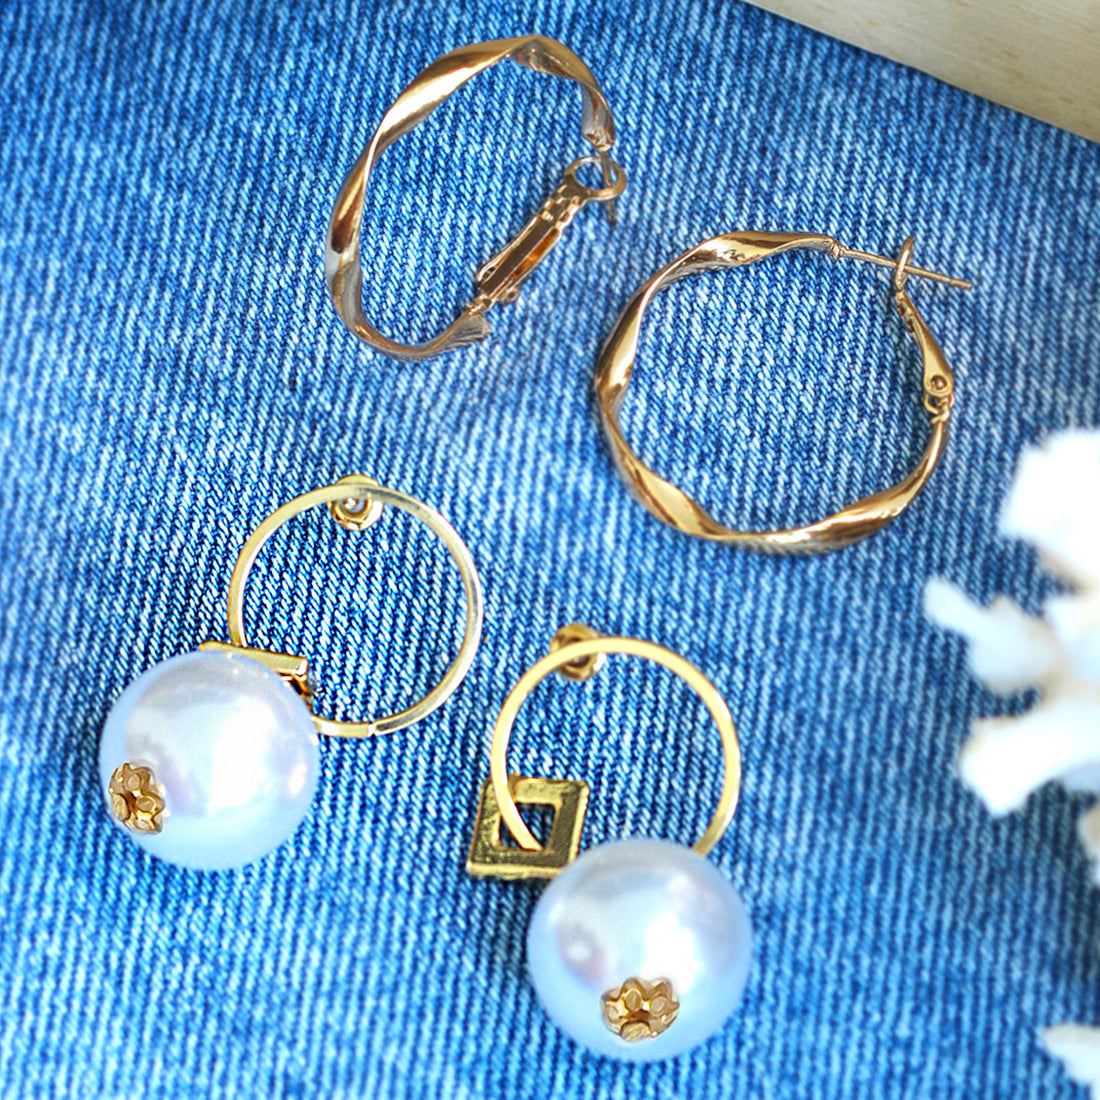 Set Of 2 Gold-Toned Twisted Hoops & Circular Pearl Drop Earrings